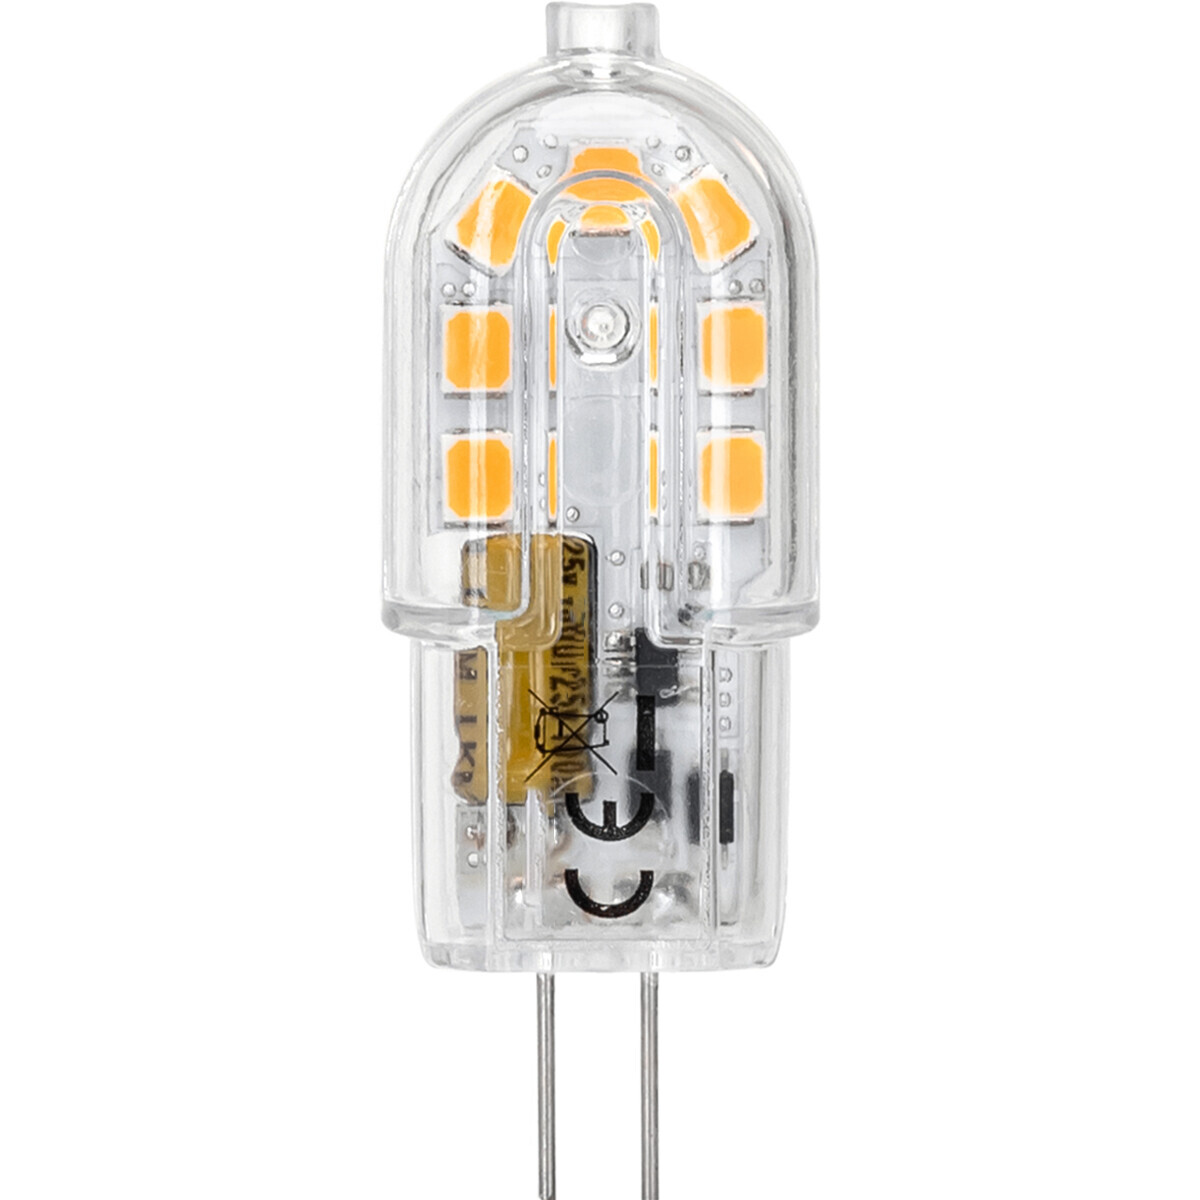 Velvalux LED Lamp - G4 Fitting - Dimbaar - 2W - Warm Wit 3000K - Transparant | Vervangt 20W